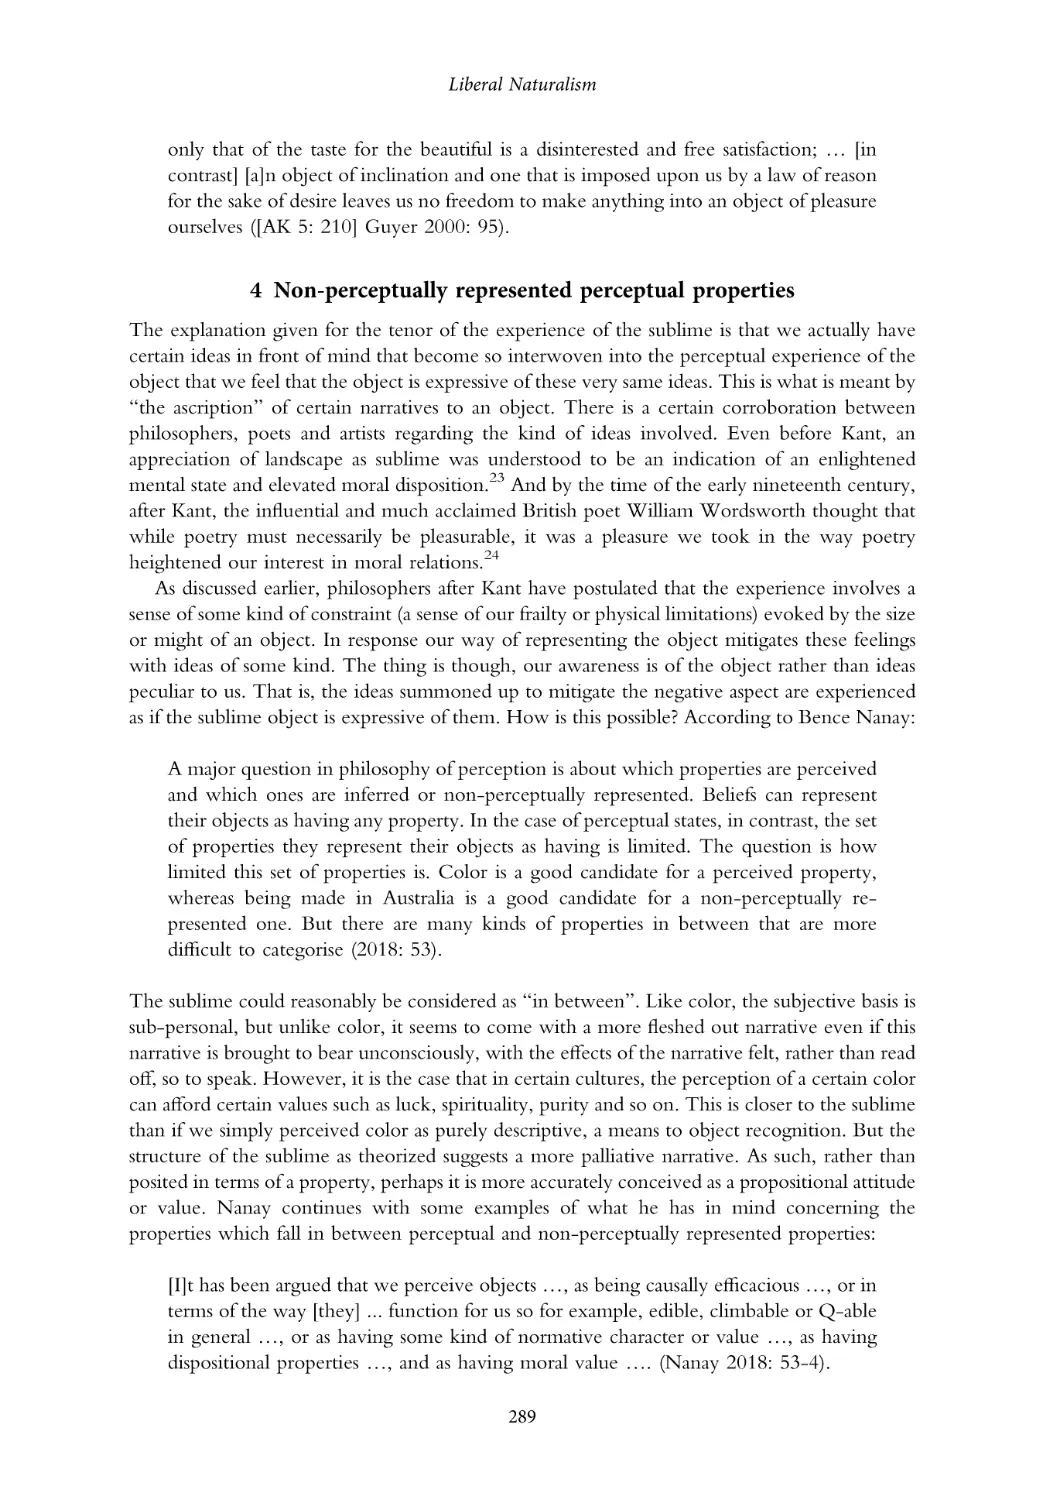 4. Non-perceptually represented perceptual properties